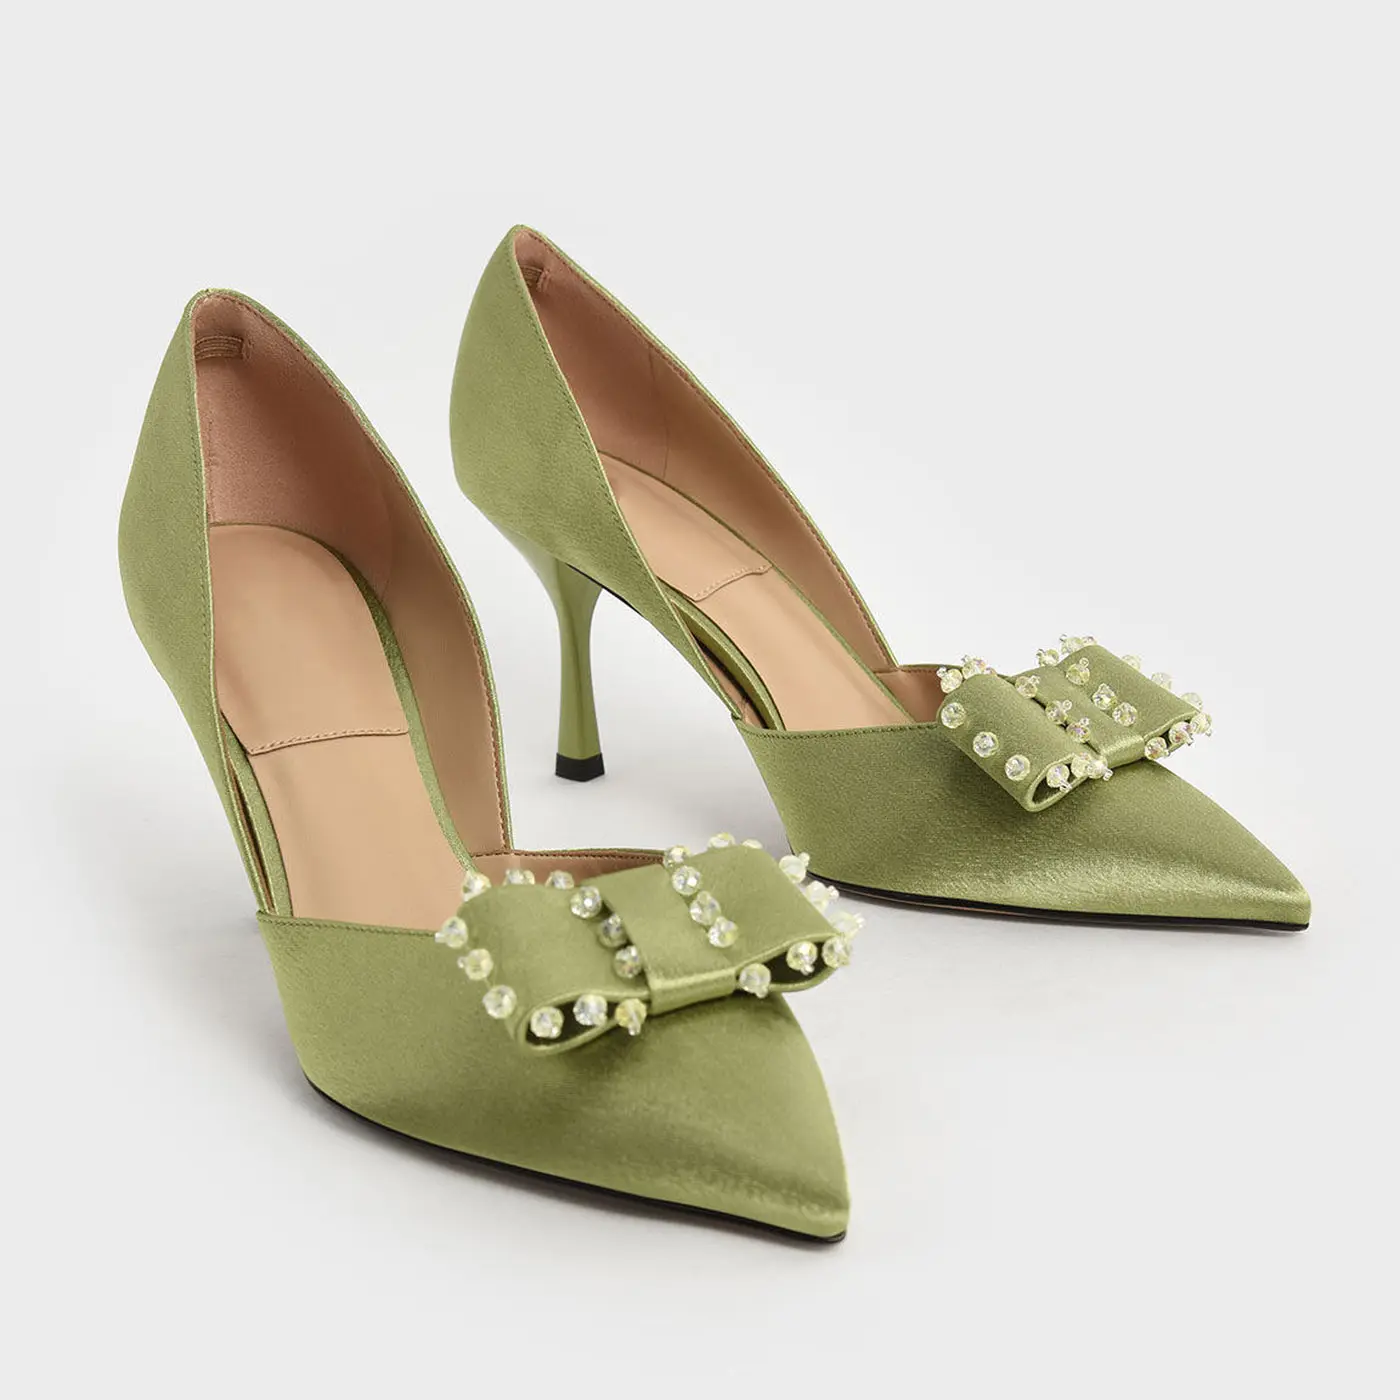 Elegant Design Medium High Heel Green Color Pumps Court Shoe Pointed Toe Sandals Shoes Women Heel High